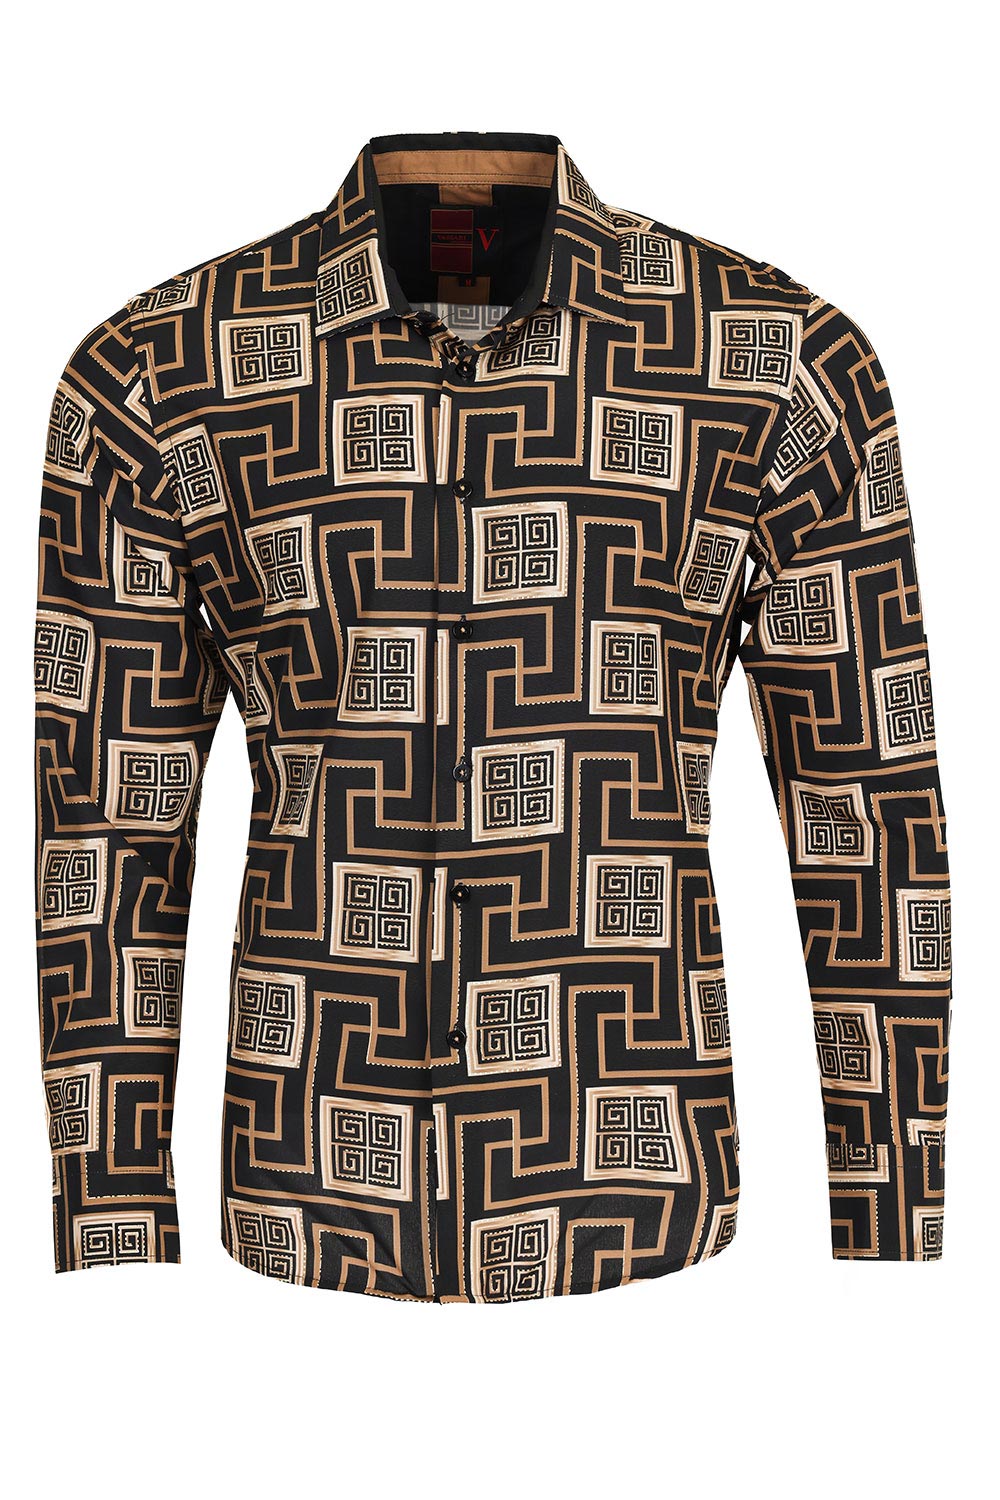 Barabas Men's Greek Key Print Design Button Down Luxury Shirts 2VS116 Black